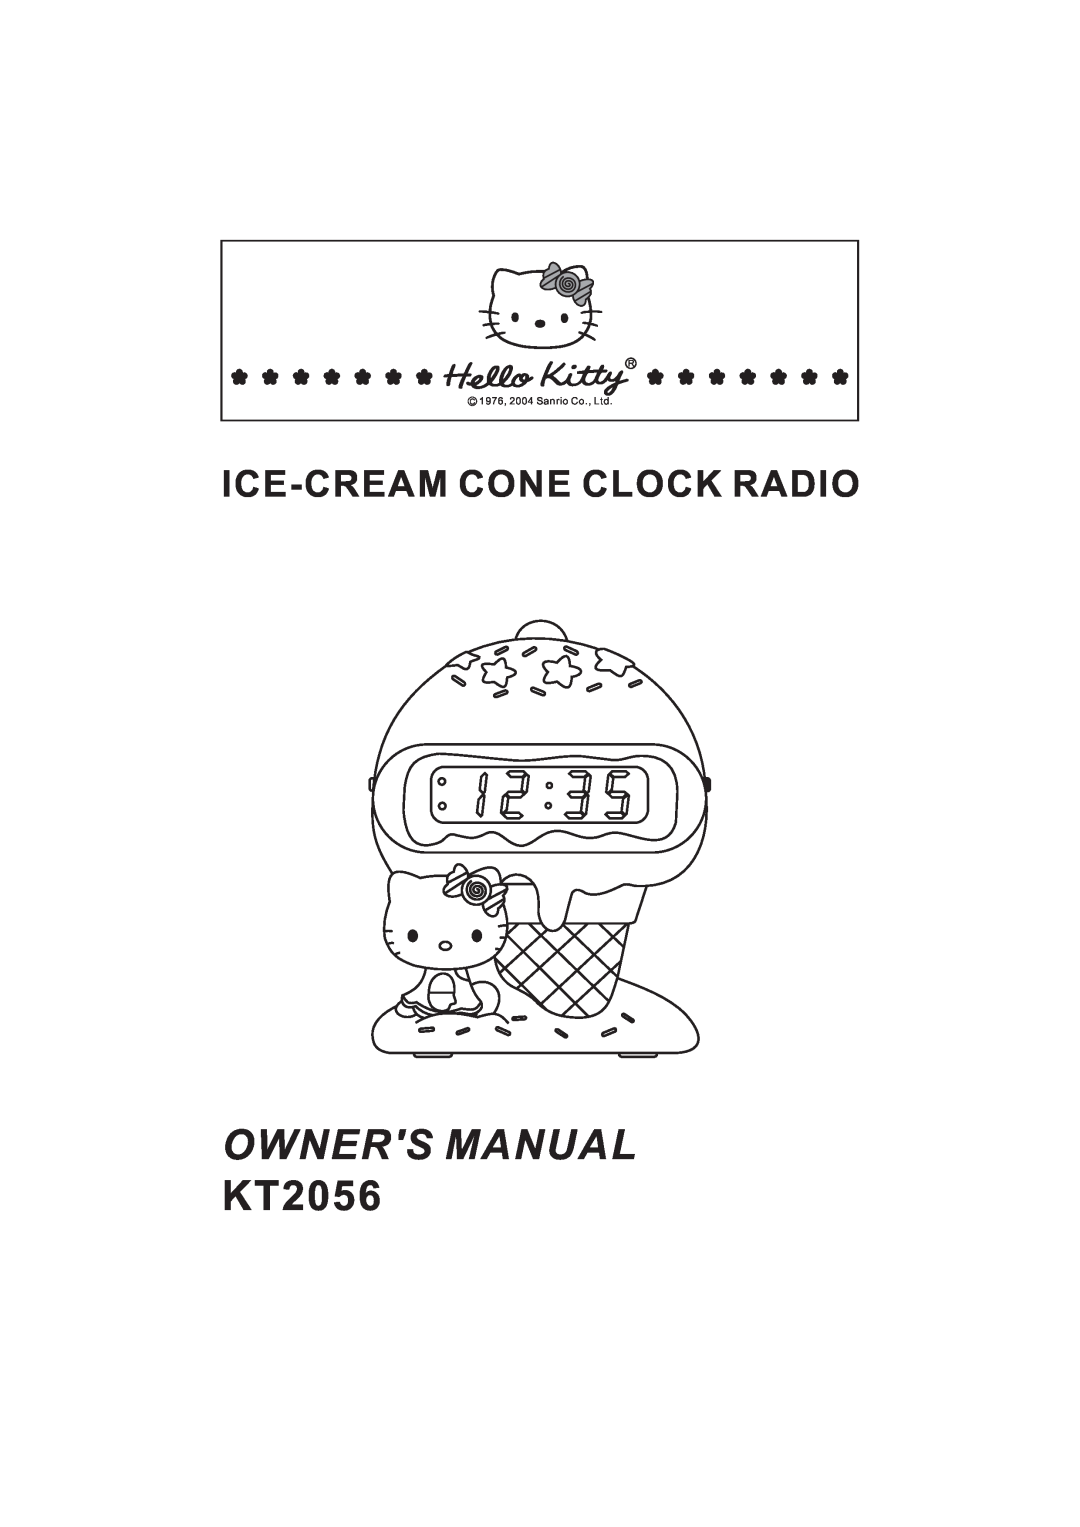 Jensen KT2056 owner manual Owners Manual, Ice-Cream Cone Clock Radio 